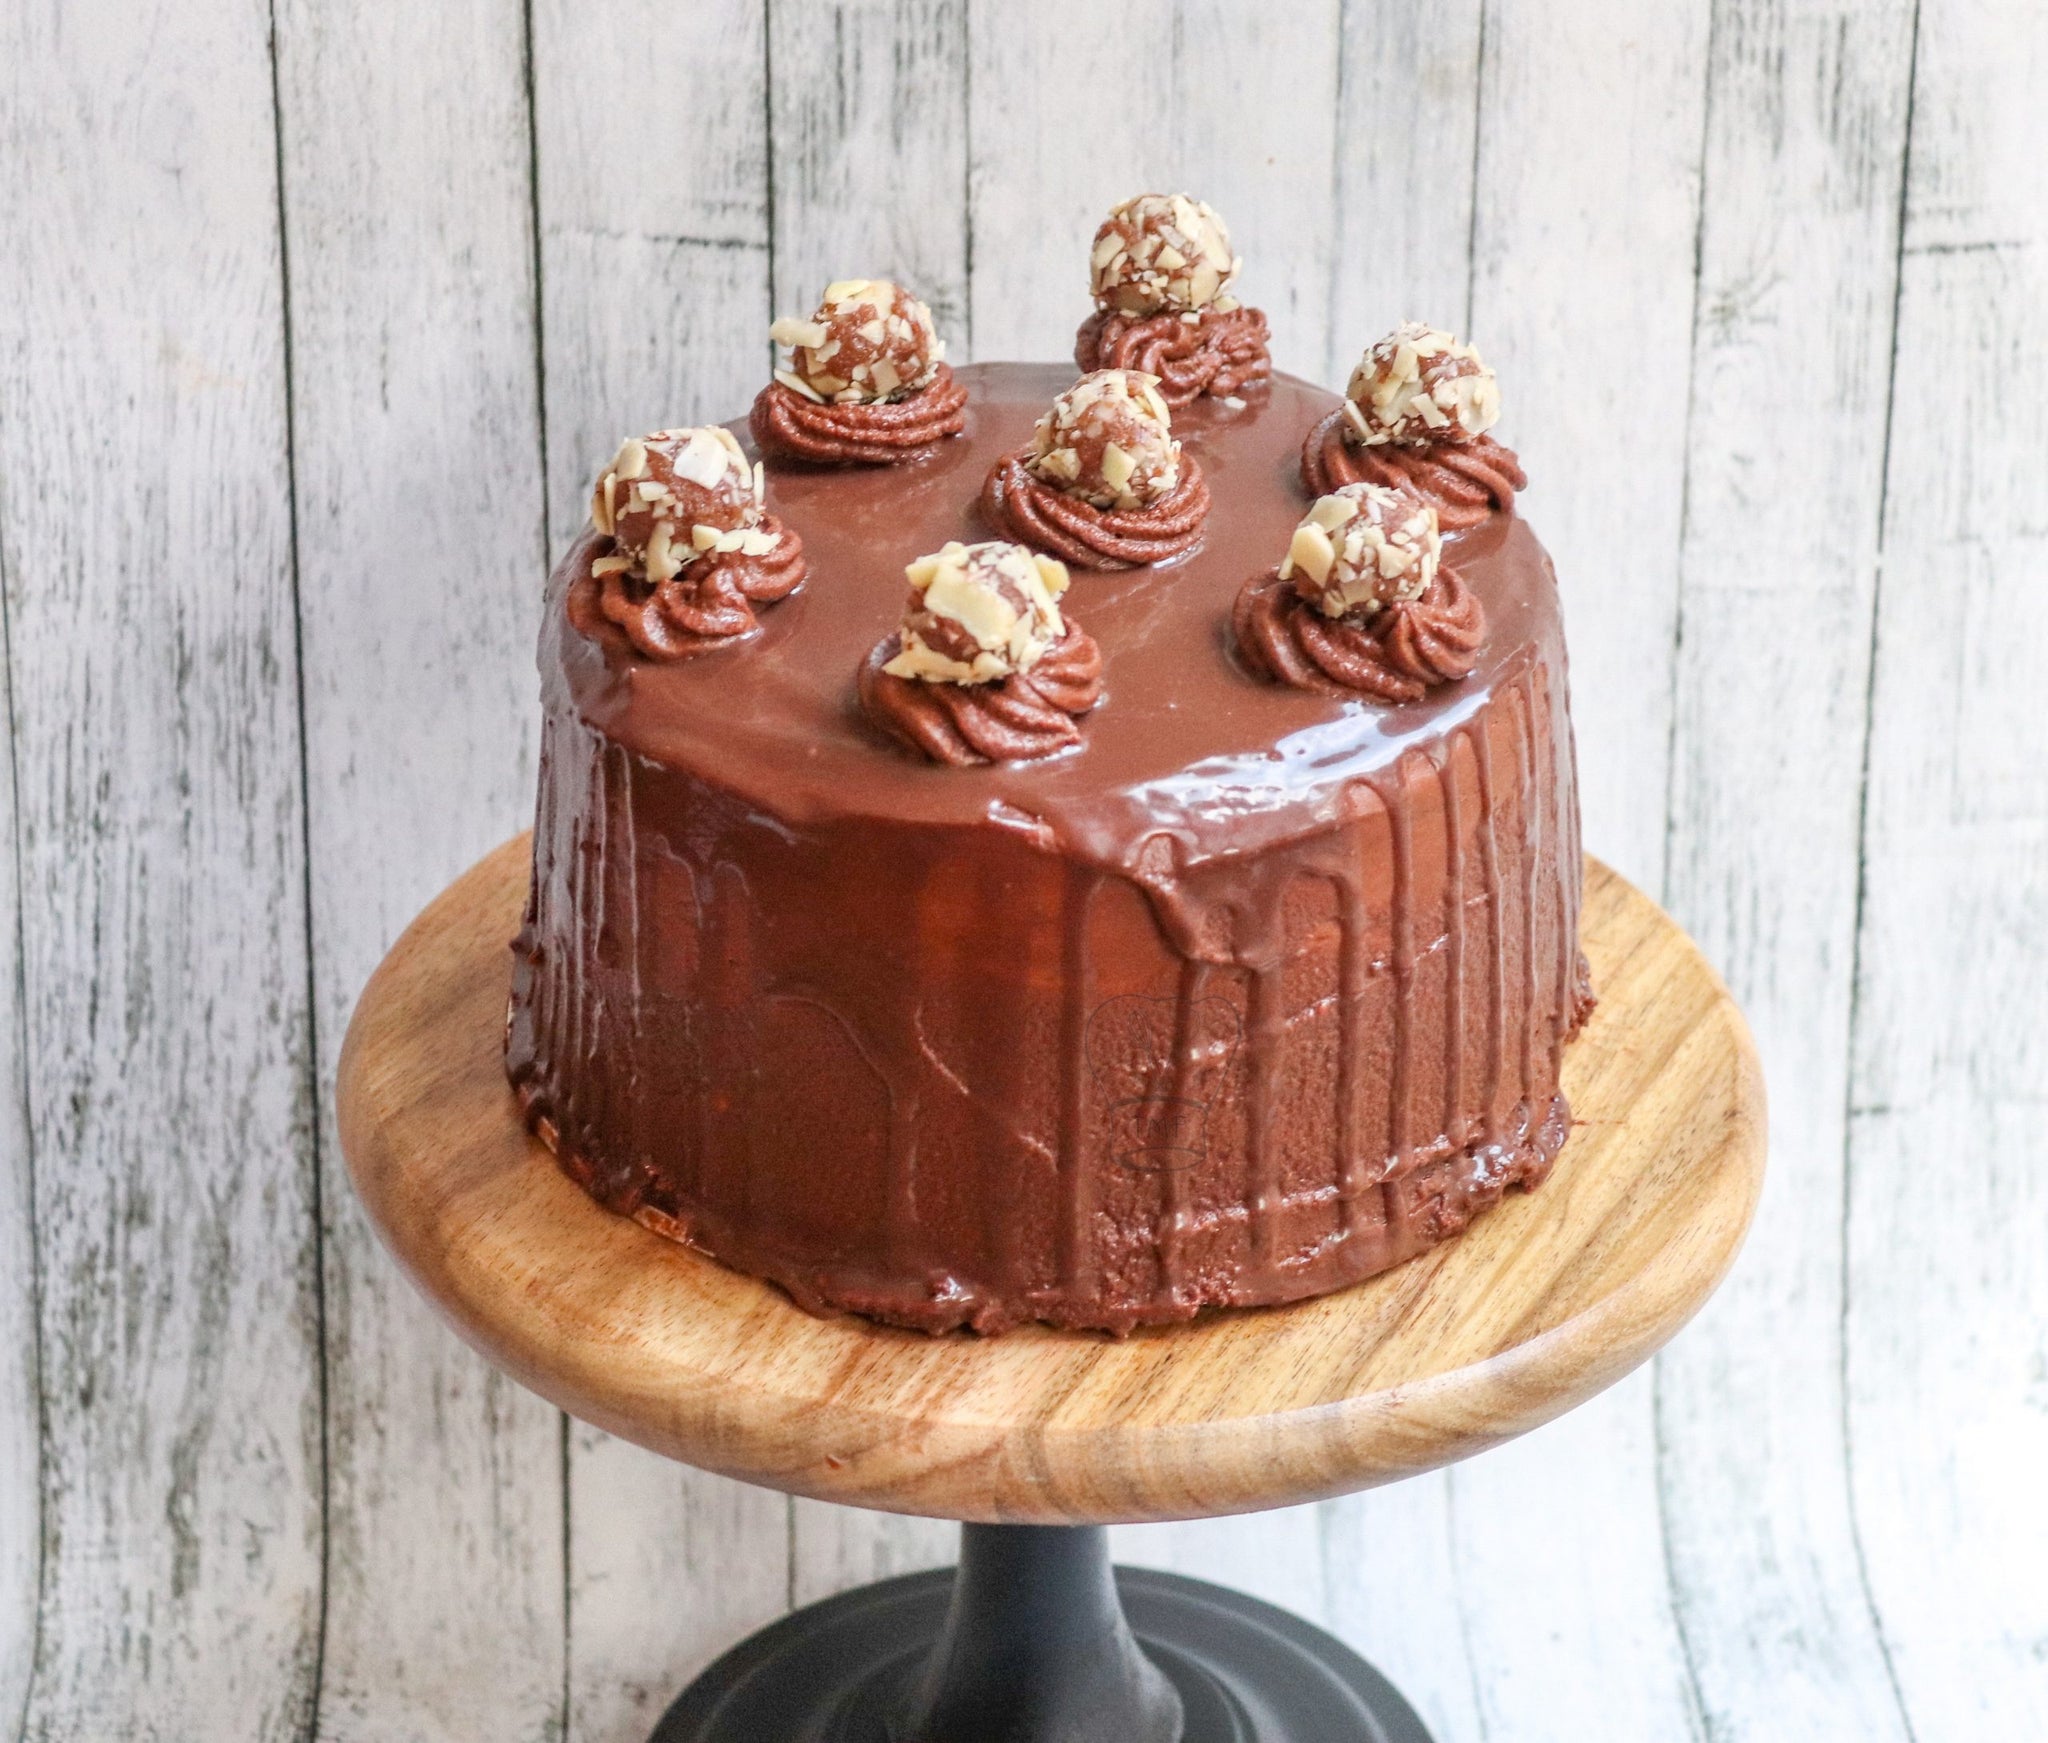 Eggless chocolate cake recipe | Best chocolate cake | super moist chocolate cake with step by step pictures and video recipe